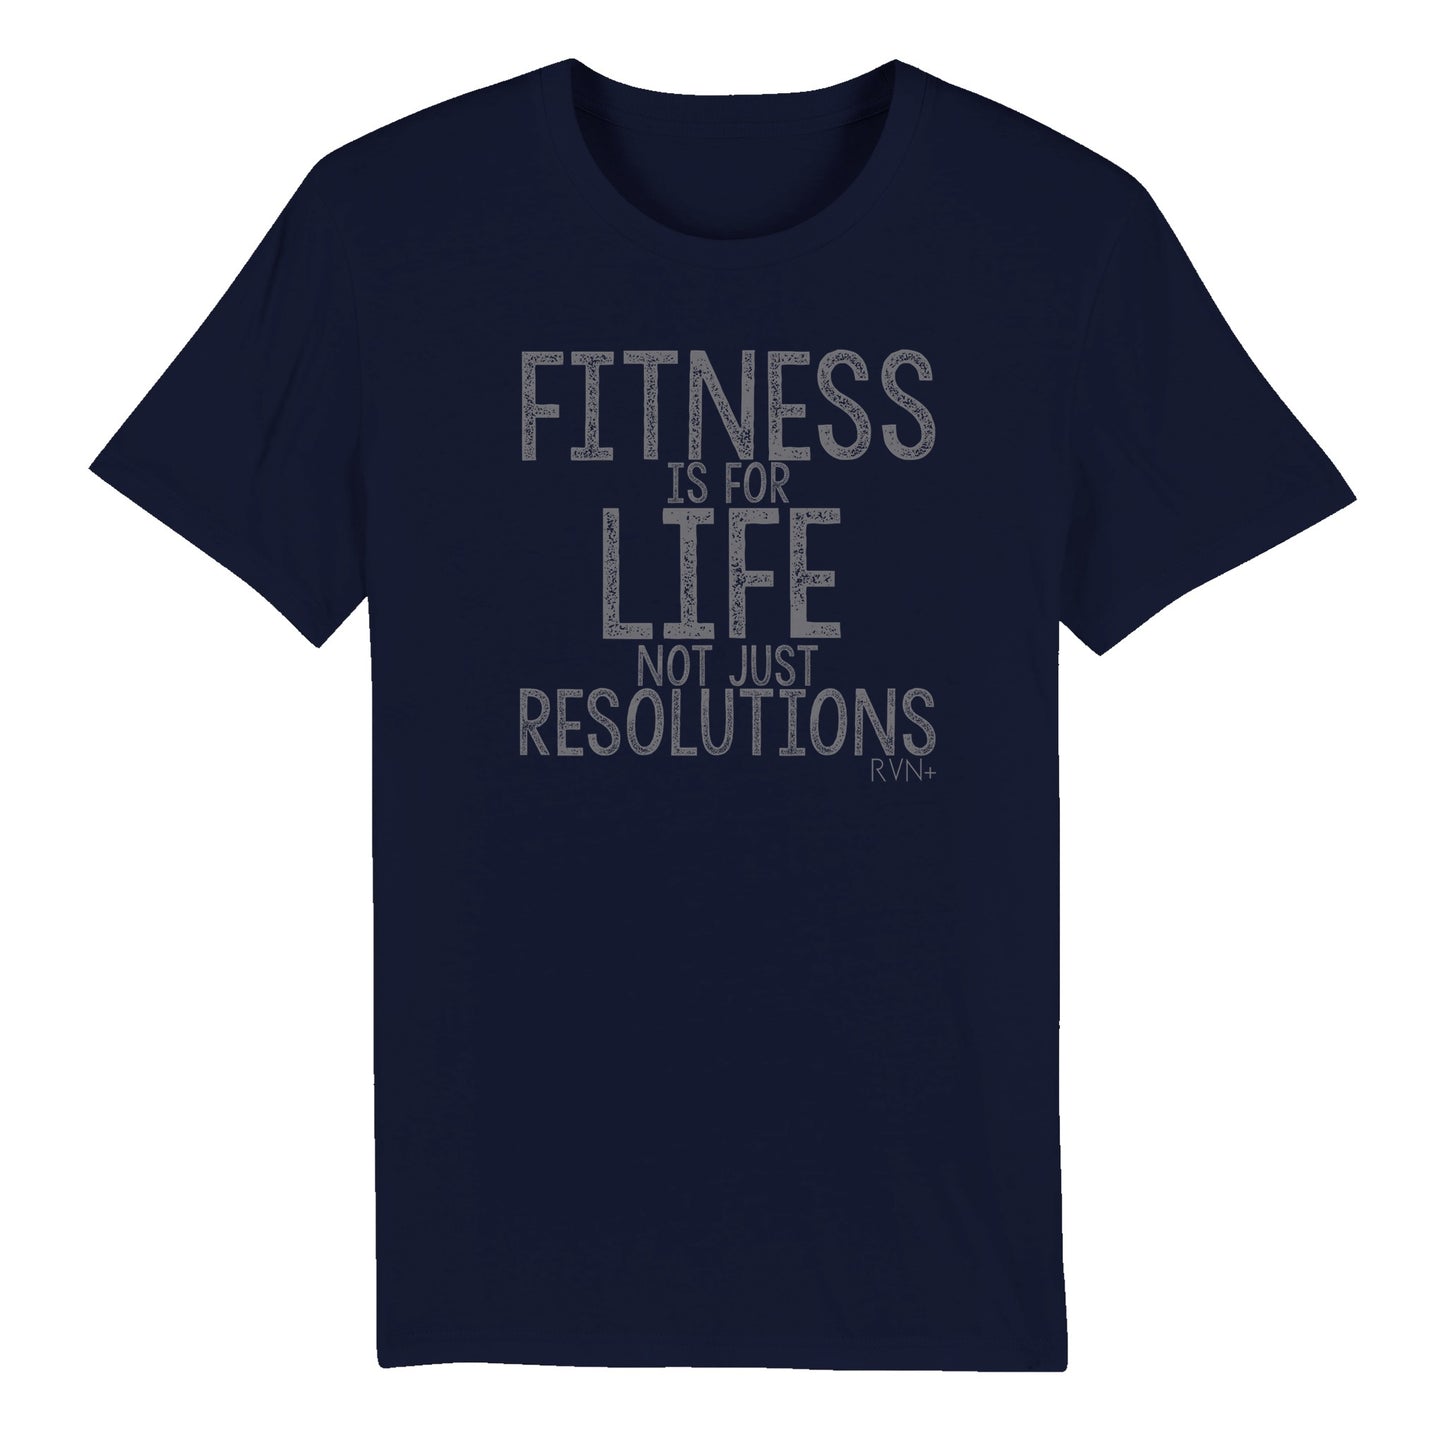 Fitness Life Resolutions - Organic Unisex Tee